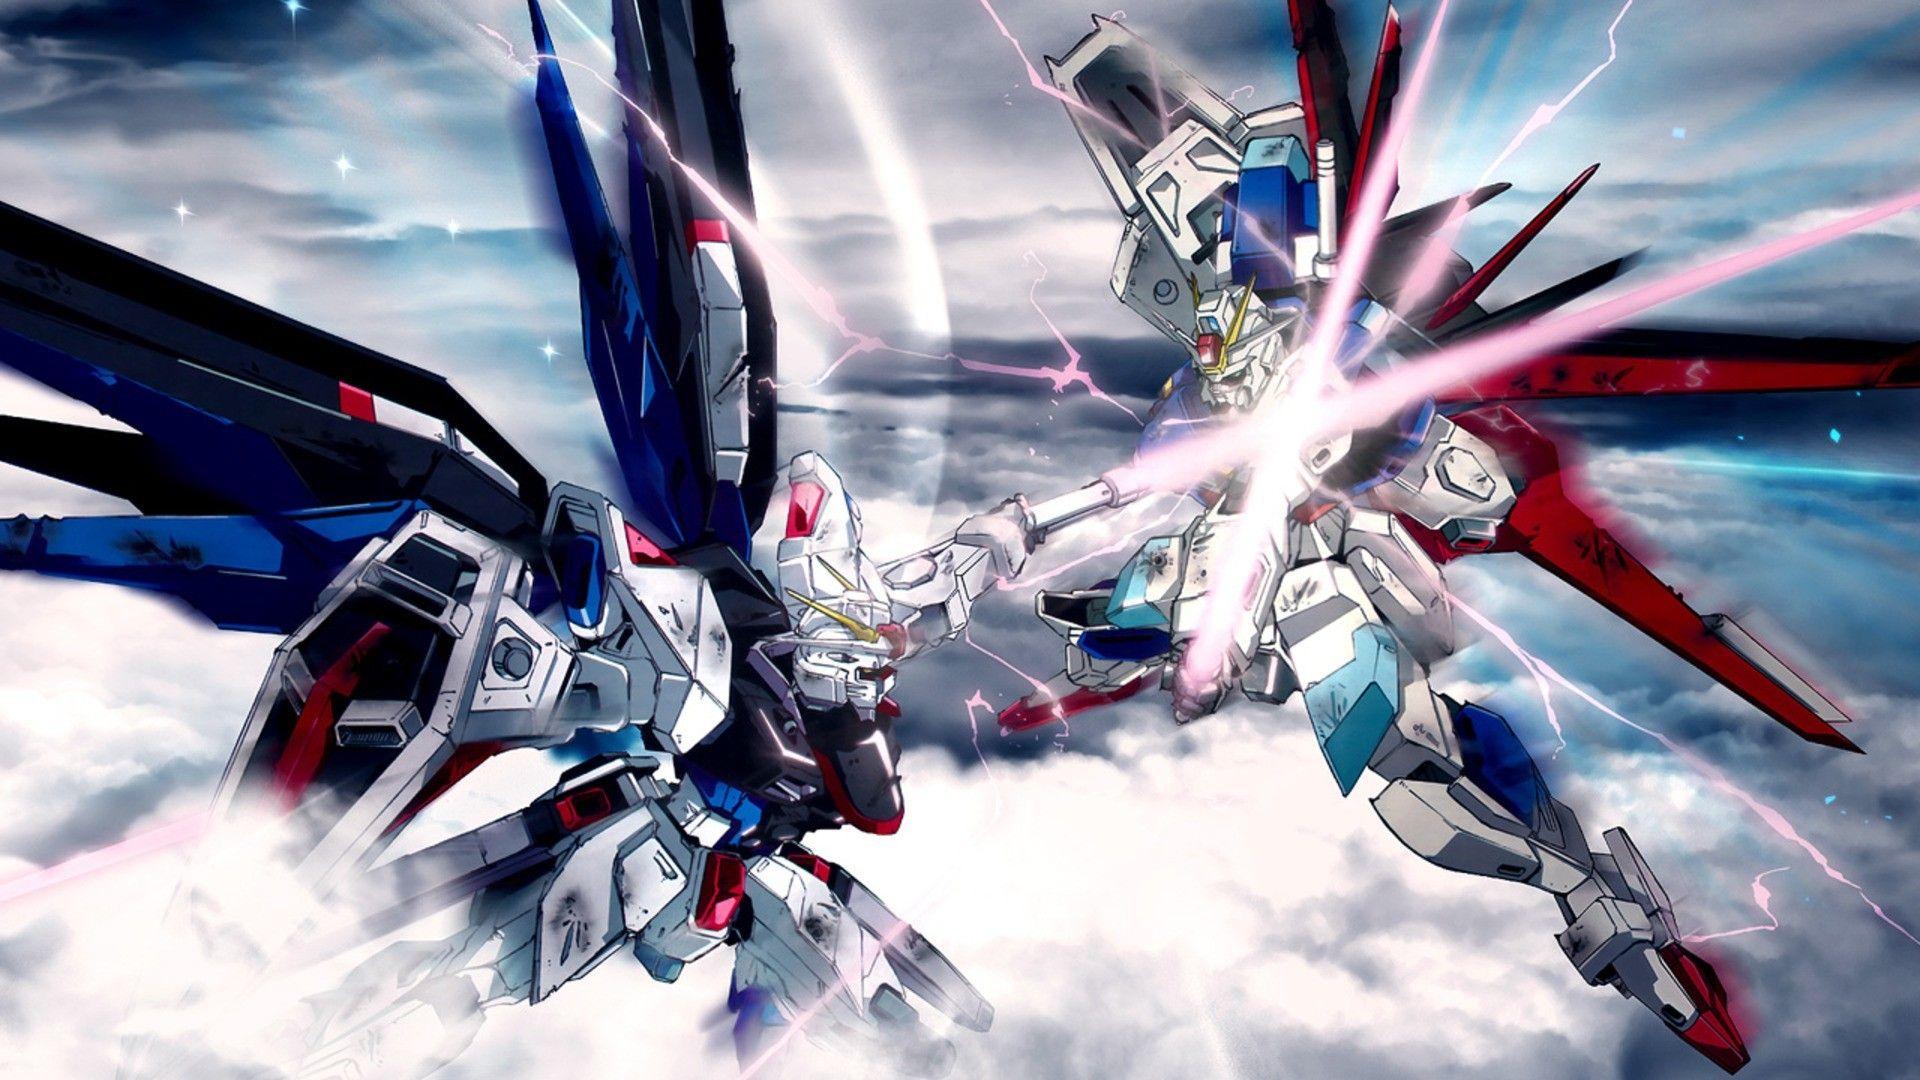 Anime Mobile Suit Gundam Seed Destiny wallpaper Desktop, Phone